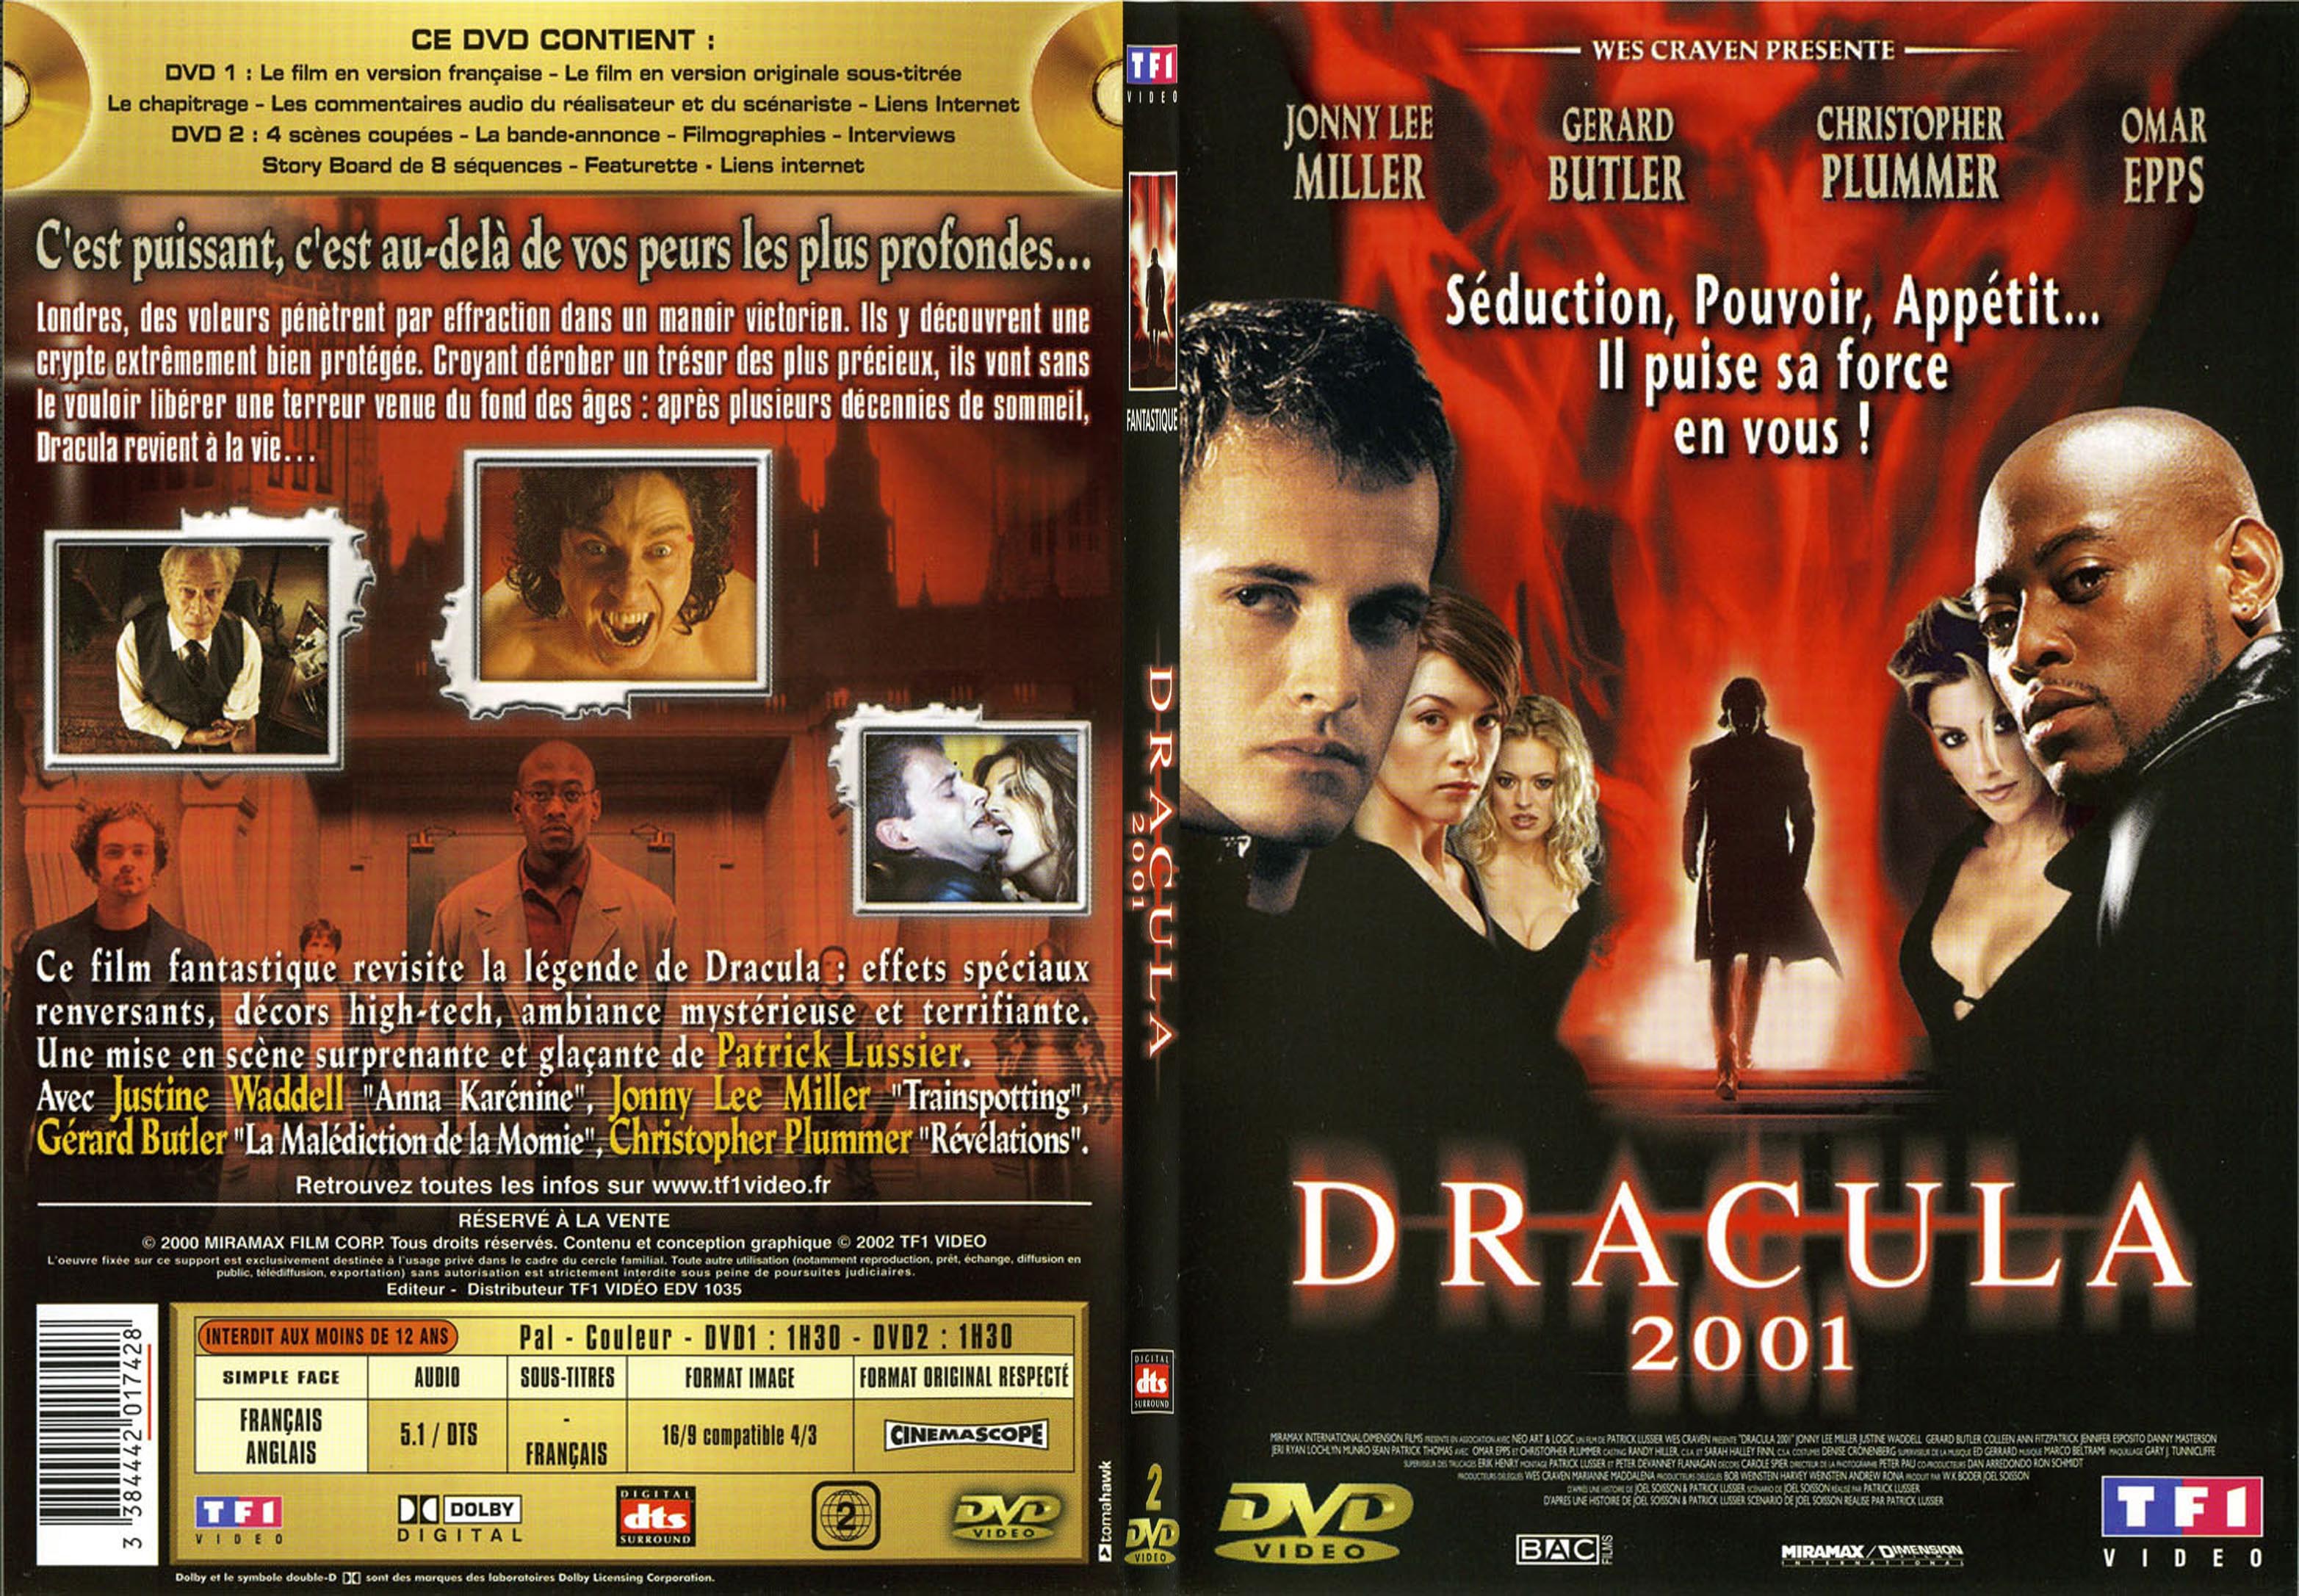 Jaquette DVD Dracula 2001 - SLIM